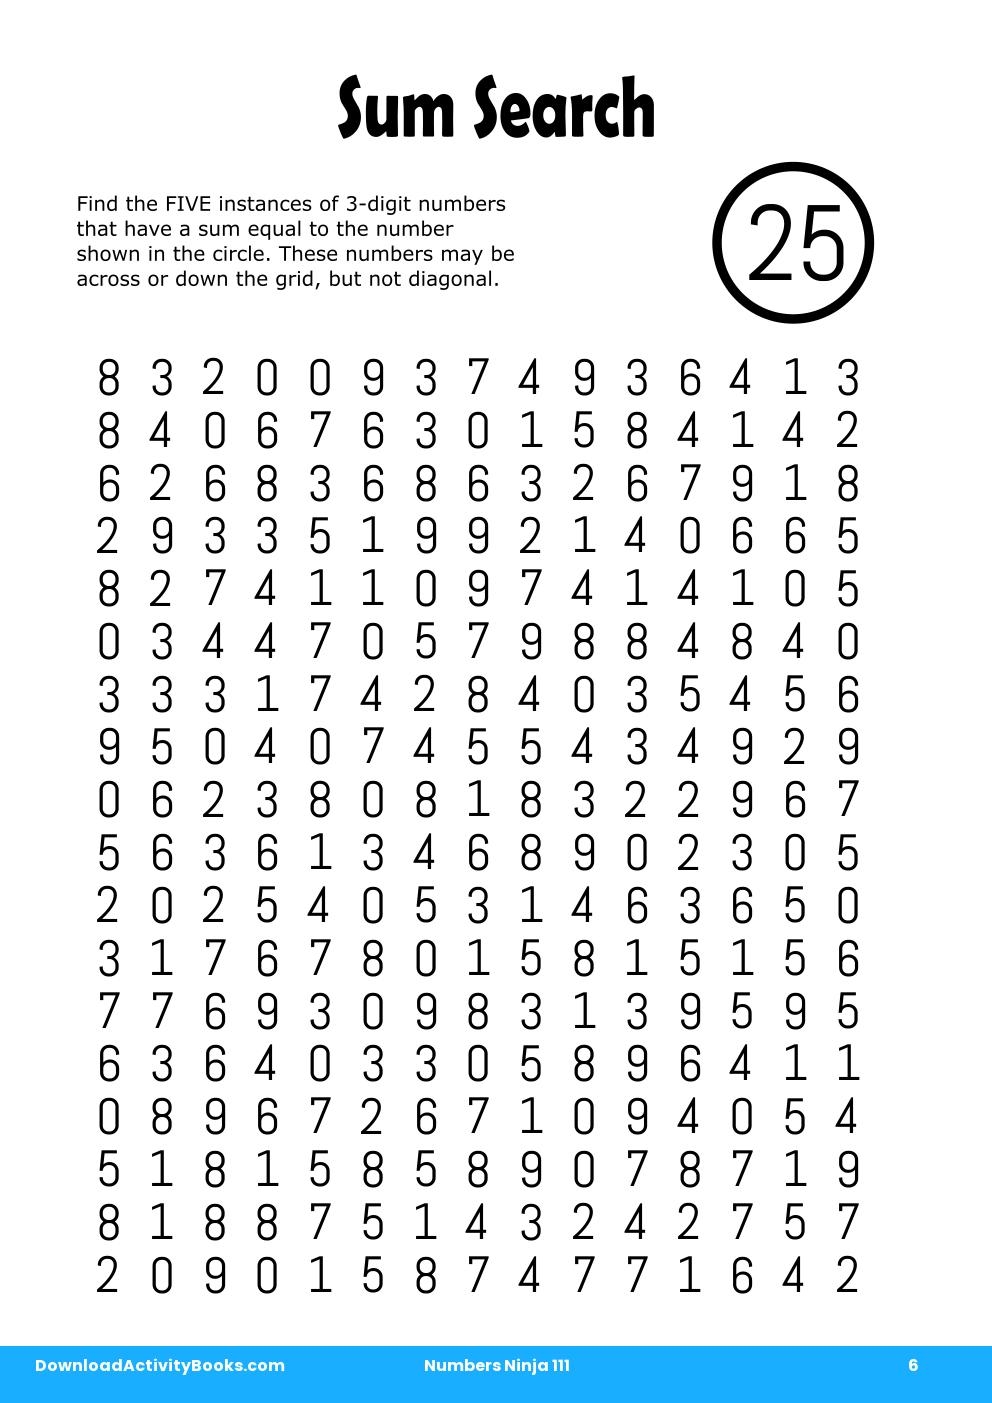 Sum Search in Numbers Ninja 111